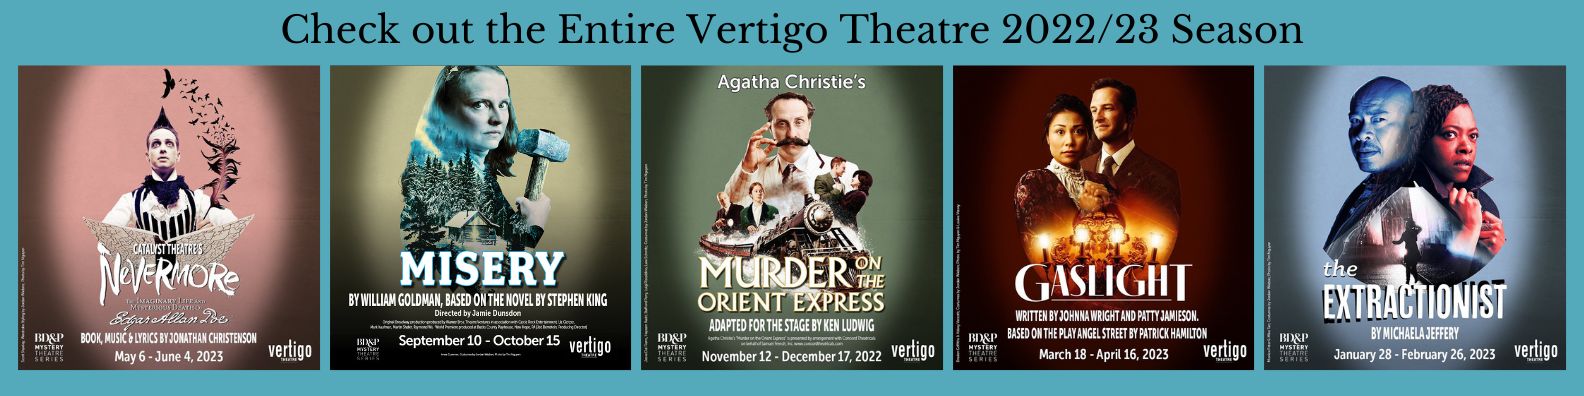 Vertigo Theatre 2022/23 Season

Misery, Murder on the Orient Express, The Extractionist, Gaslight, Nevermore